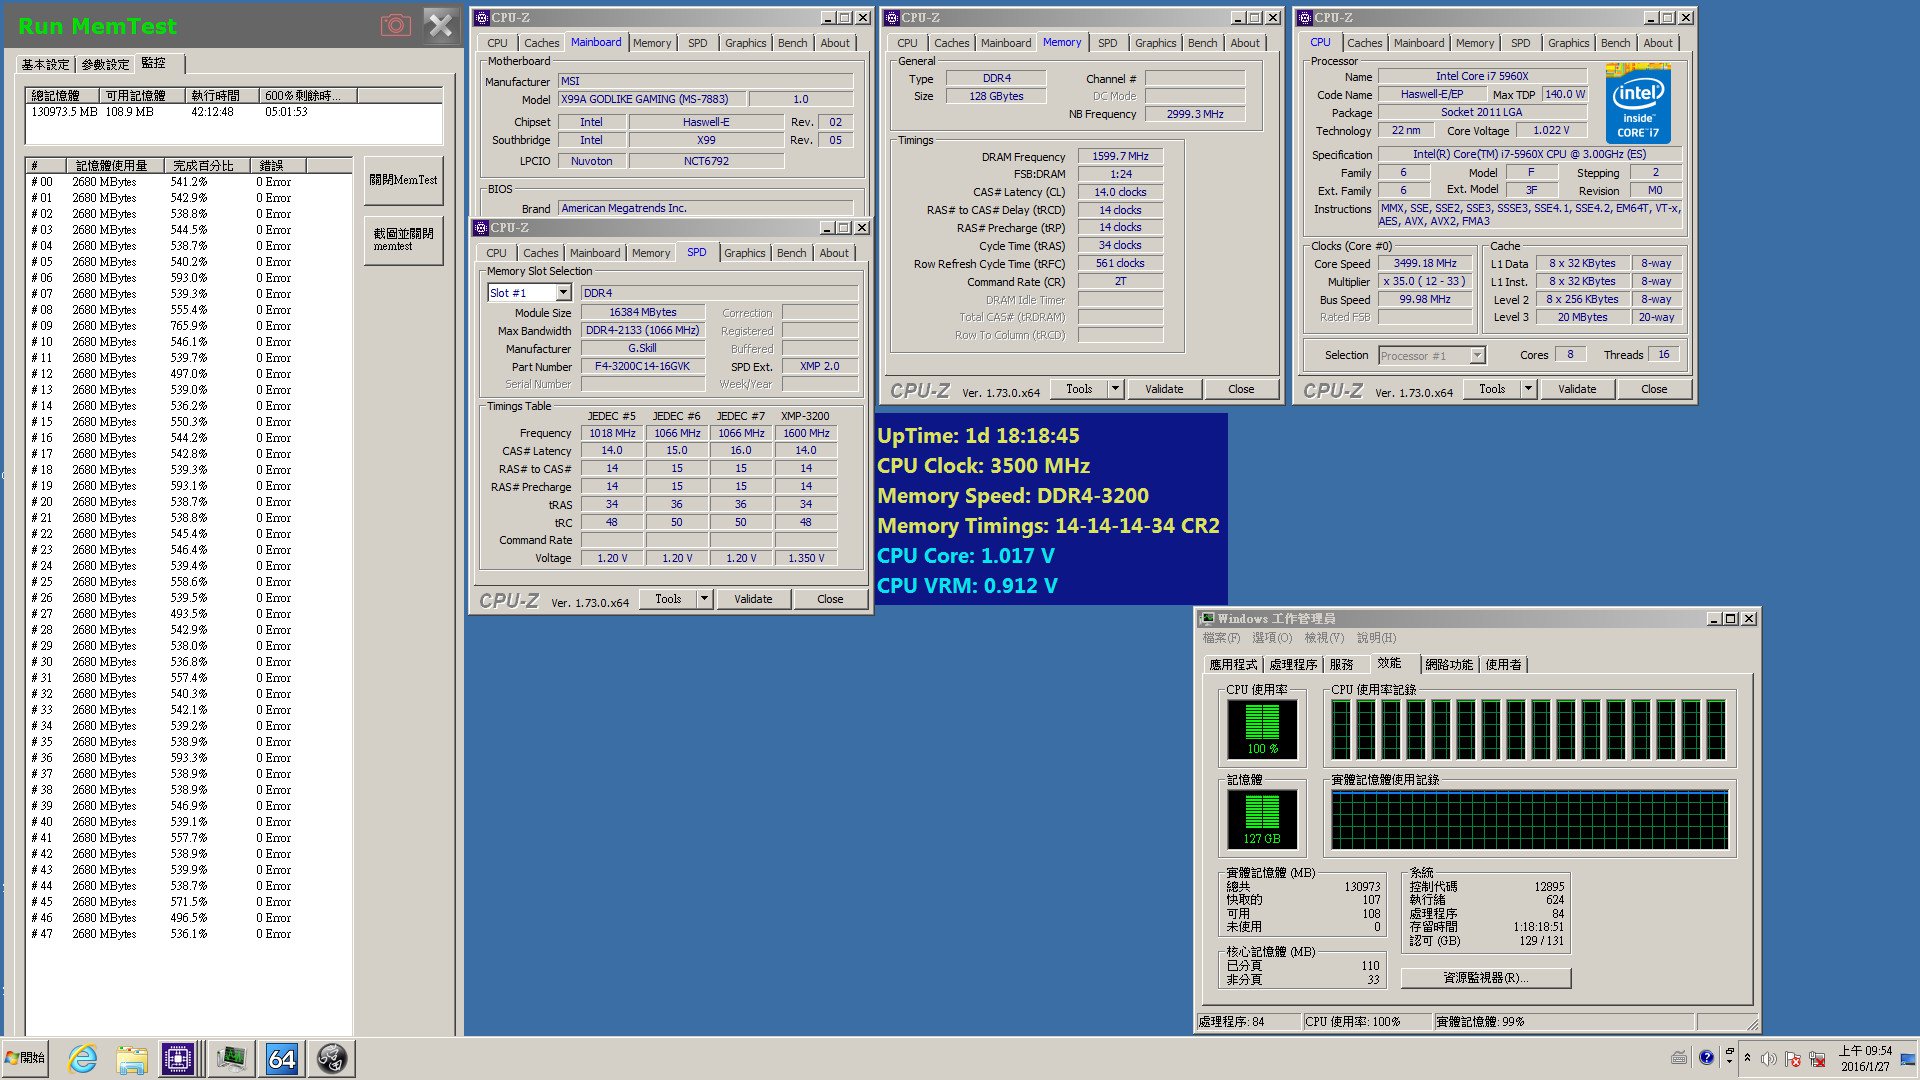 128GB-DDR4-3200MHz-RipJaws-V-screenshot